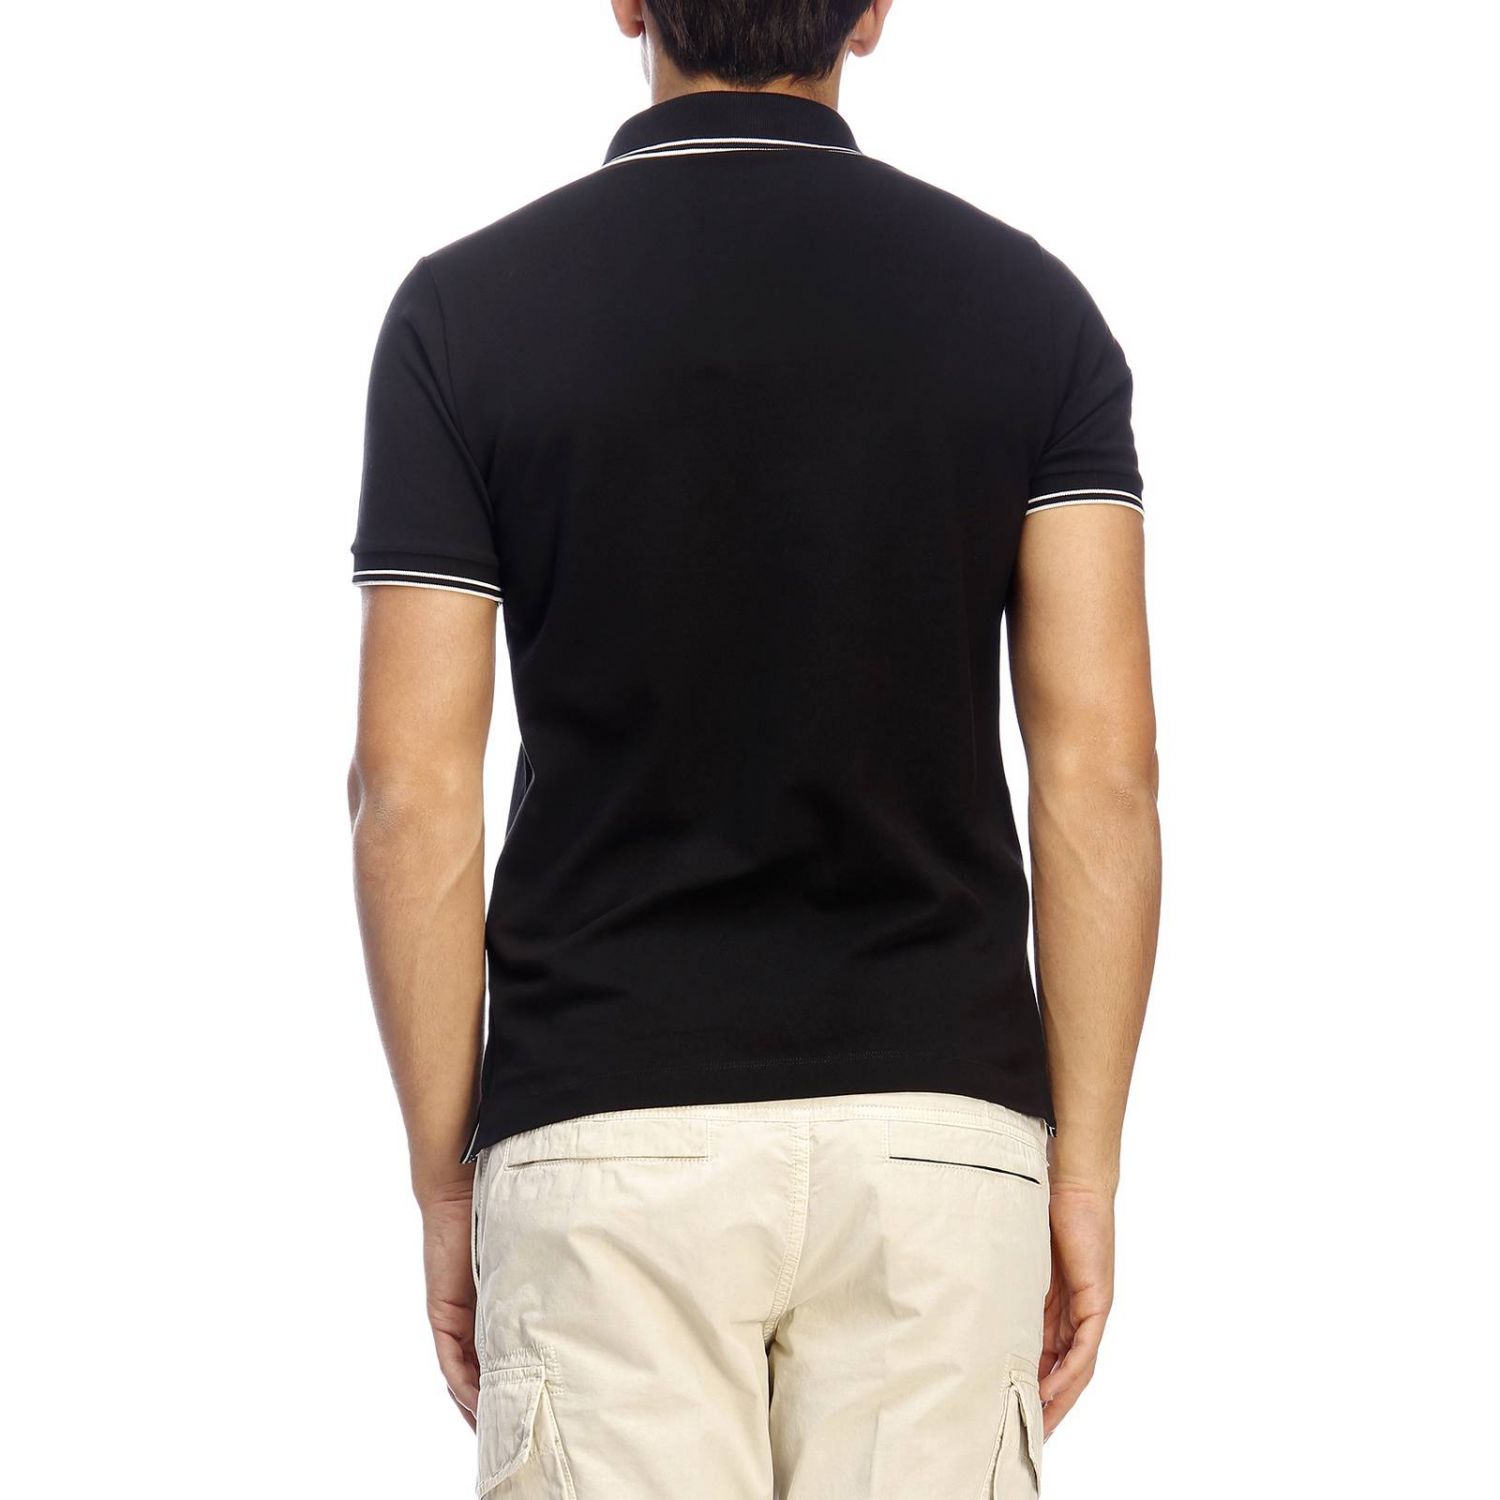 STONE ISLAND: T-shirt men | T-Shirt Stone Island Men Black | T-Shirt ...